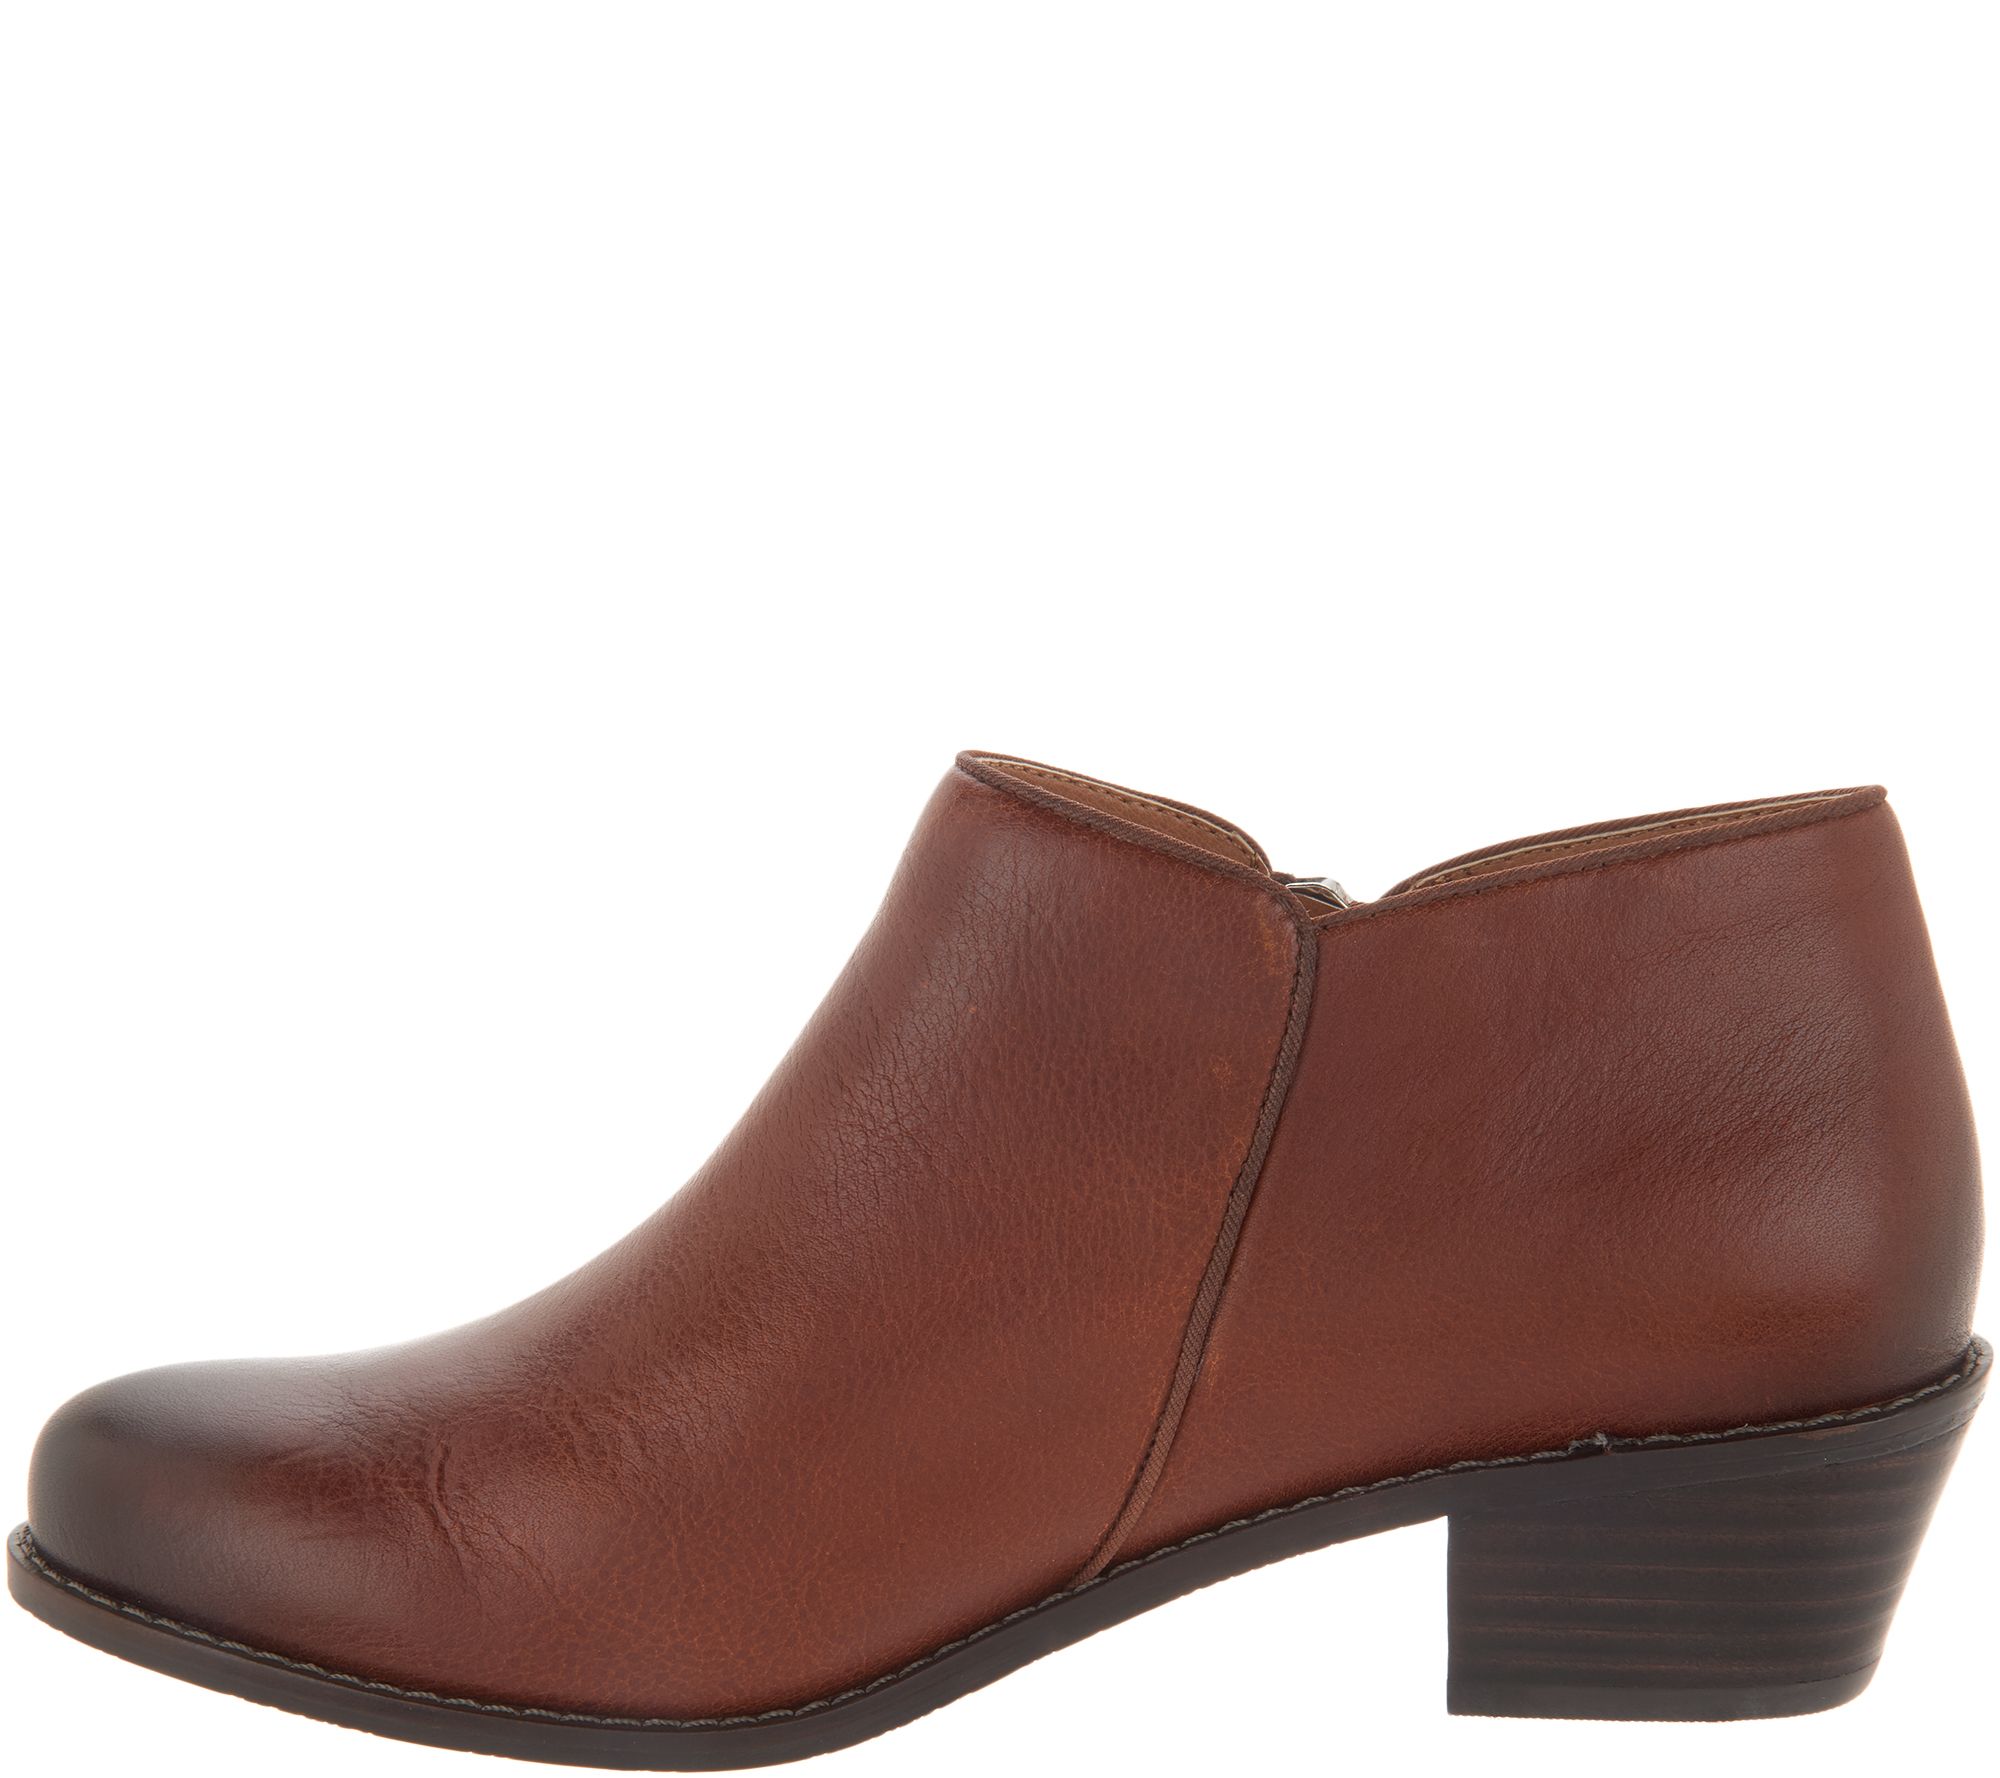 Vionic Leather Ankle Boots - Jolene - QVC.com